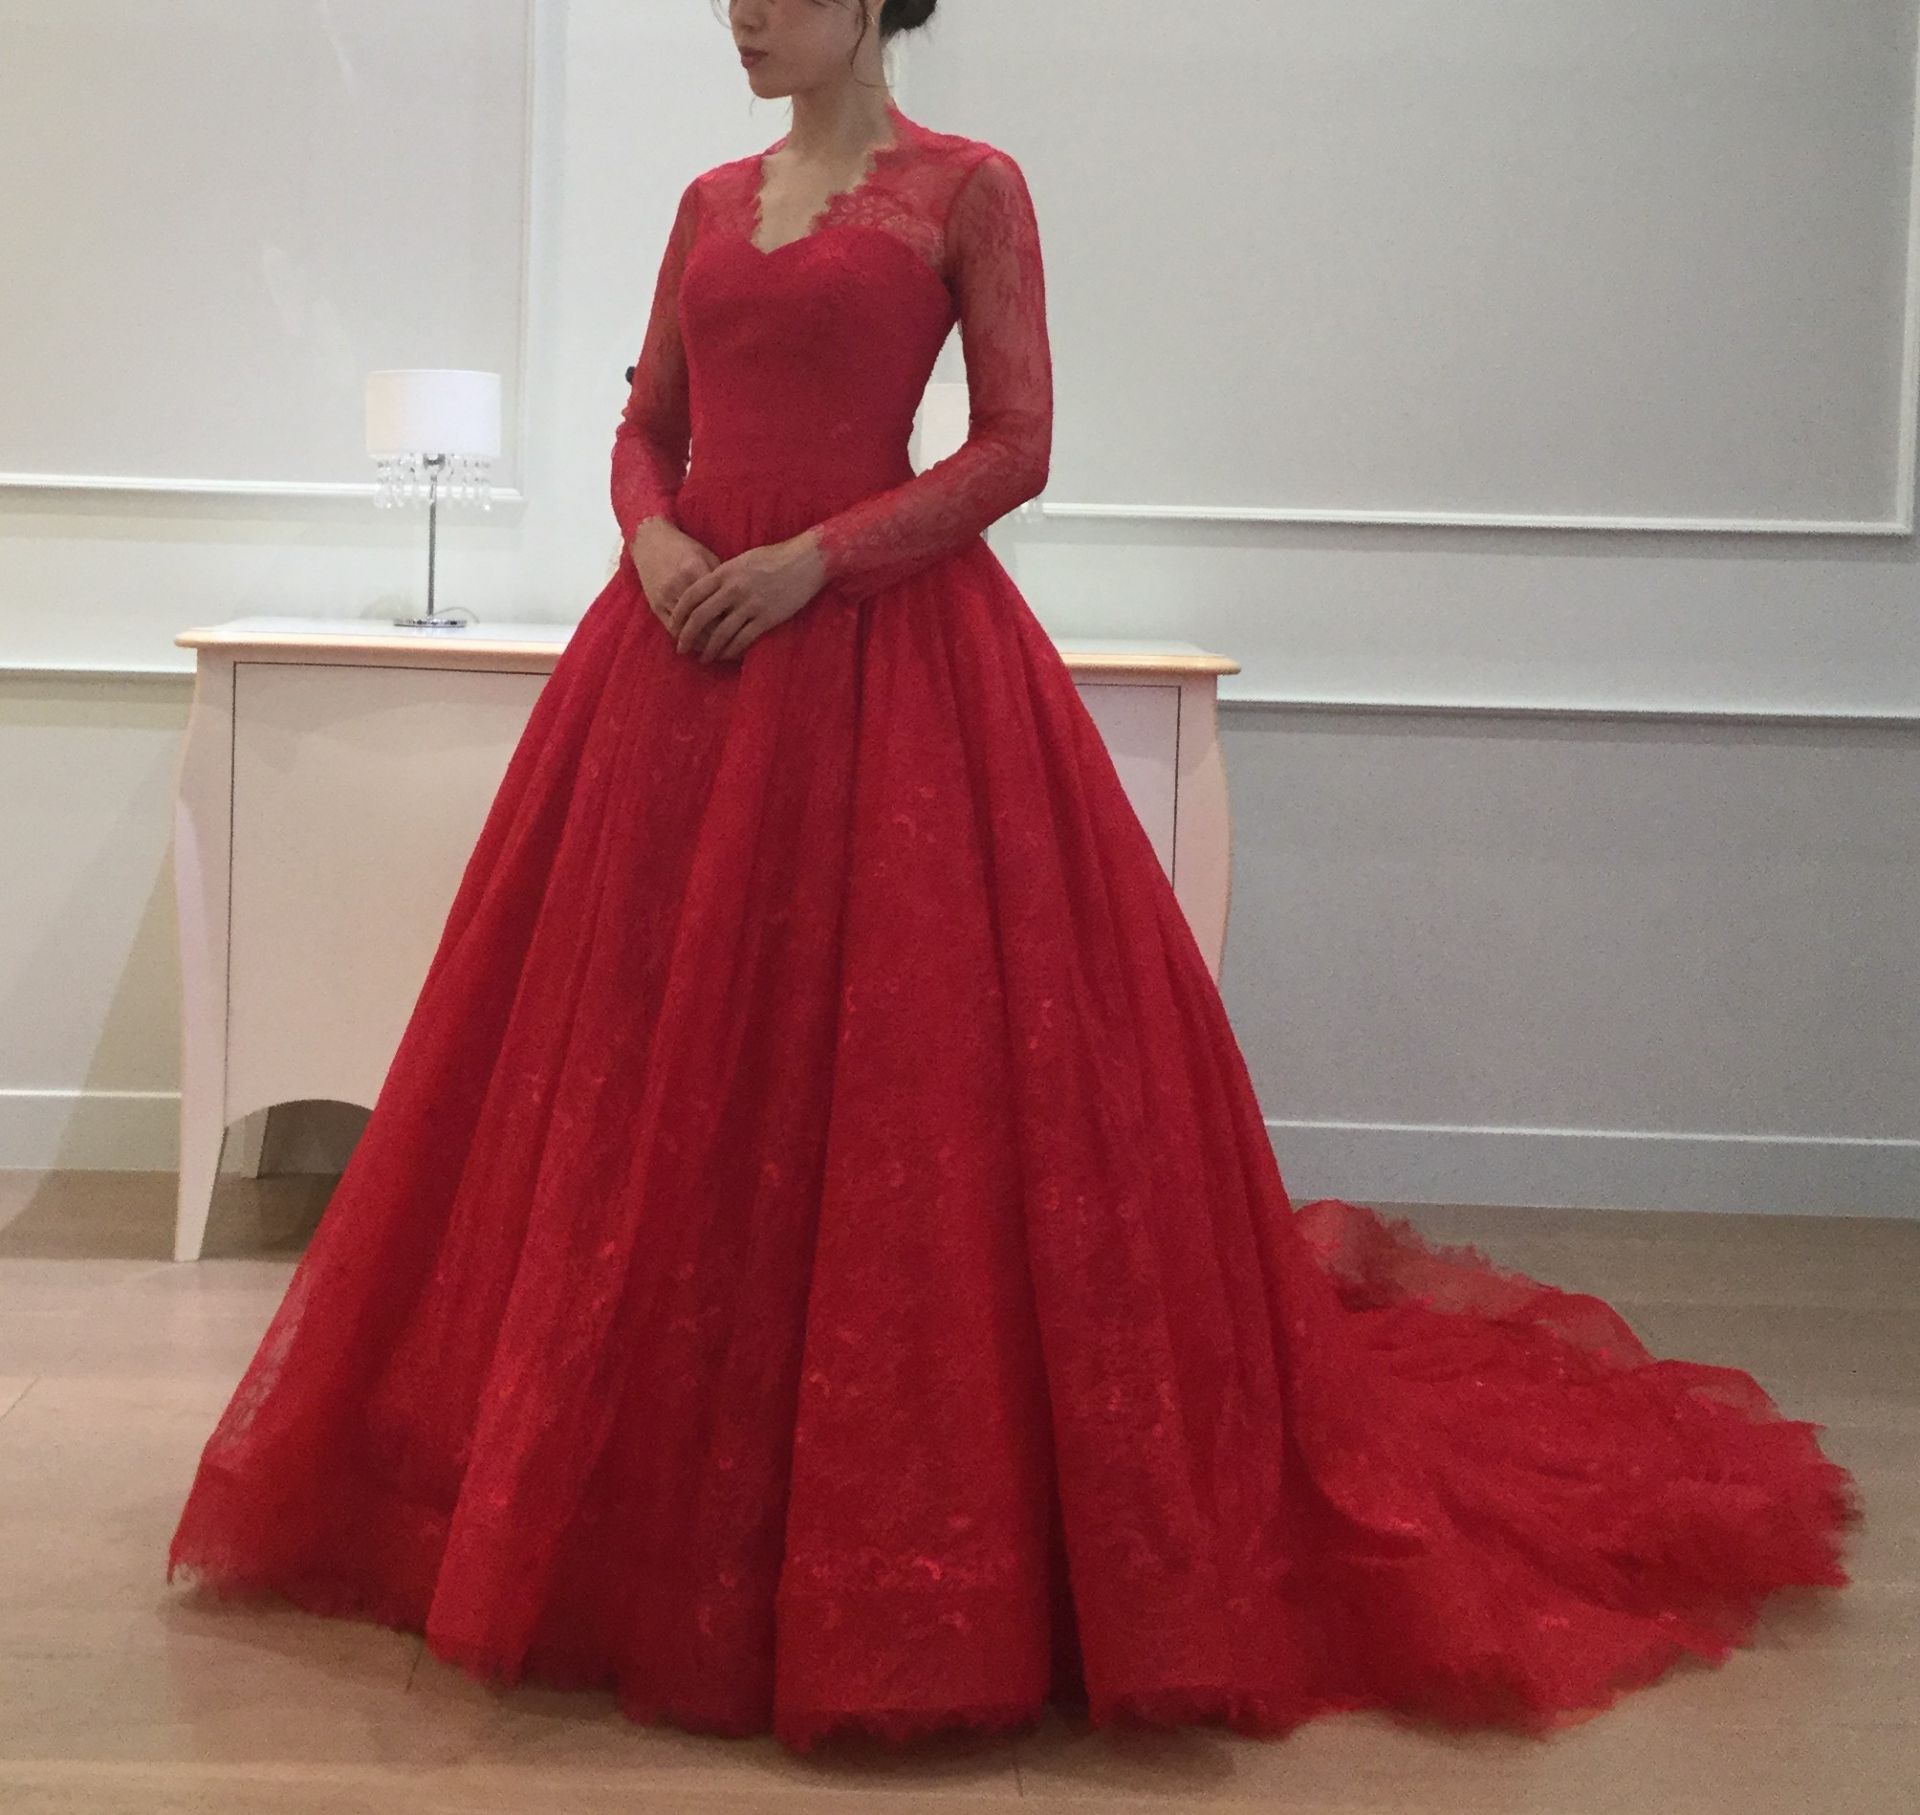 TRESOR (トレソア) | RED |カラードレス | granmanie | ROSANNA PERRONE | wedding dress